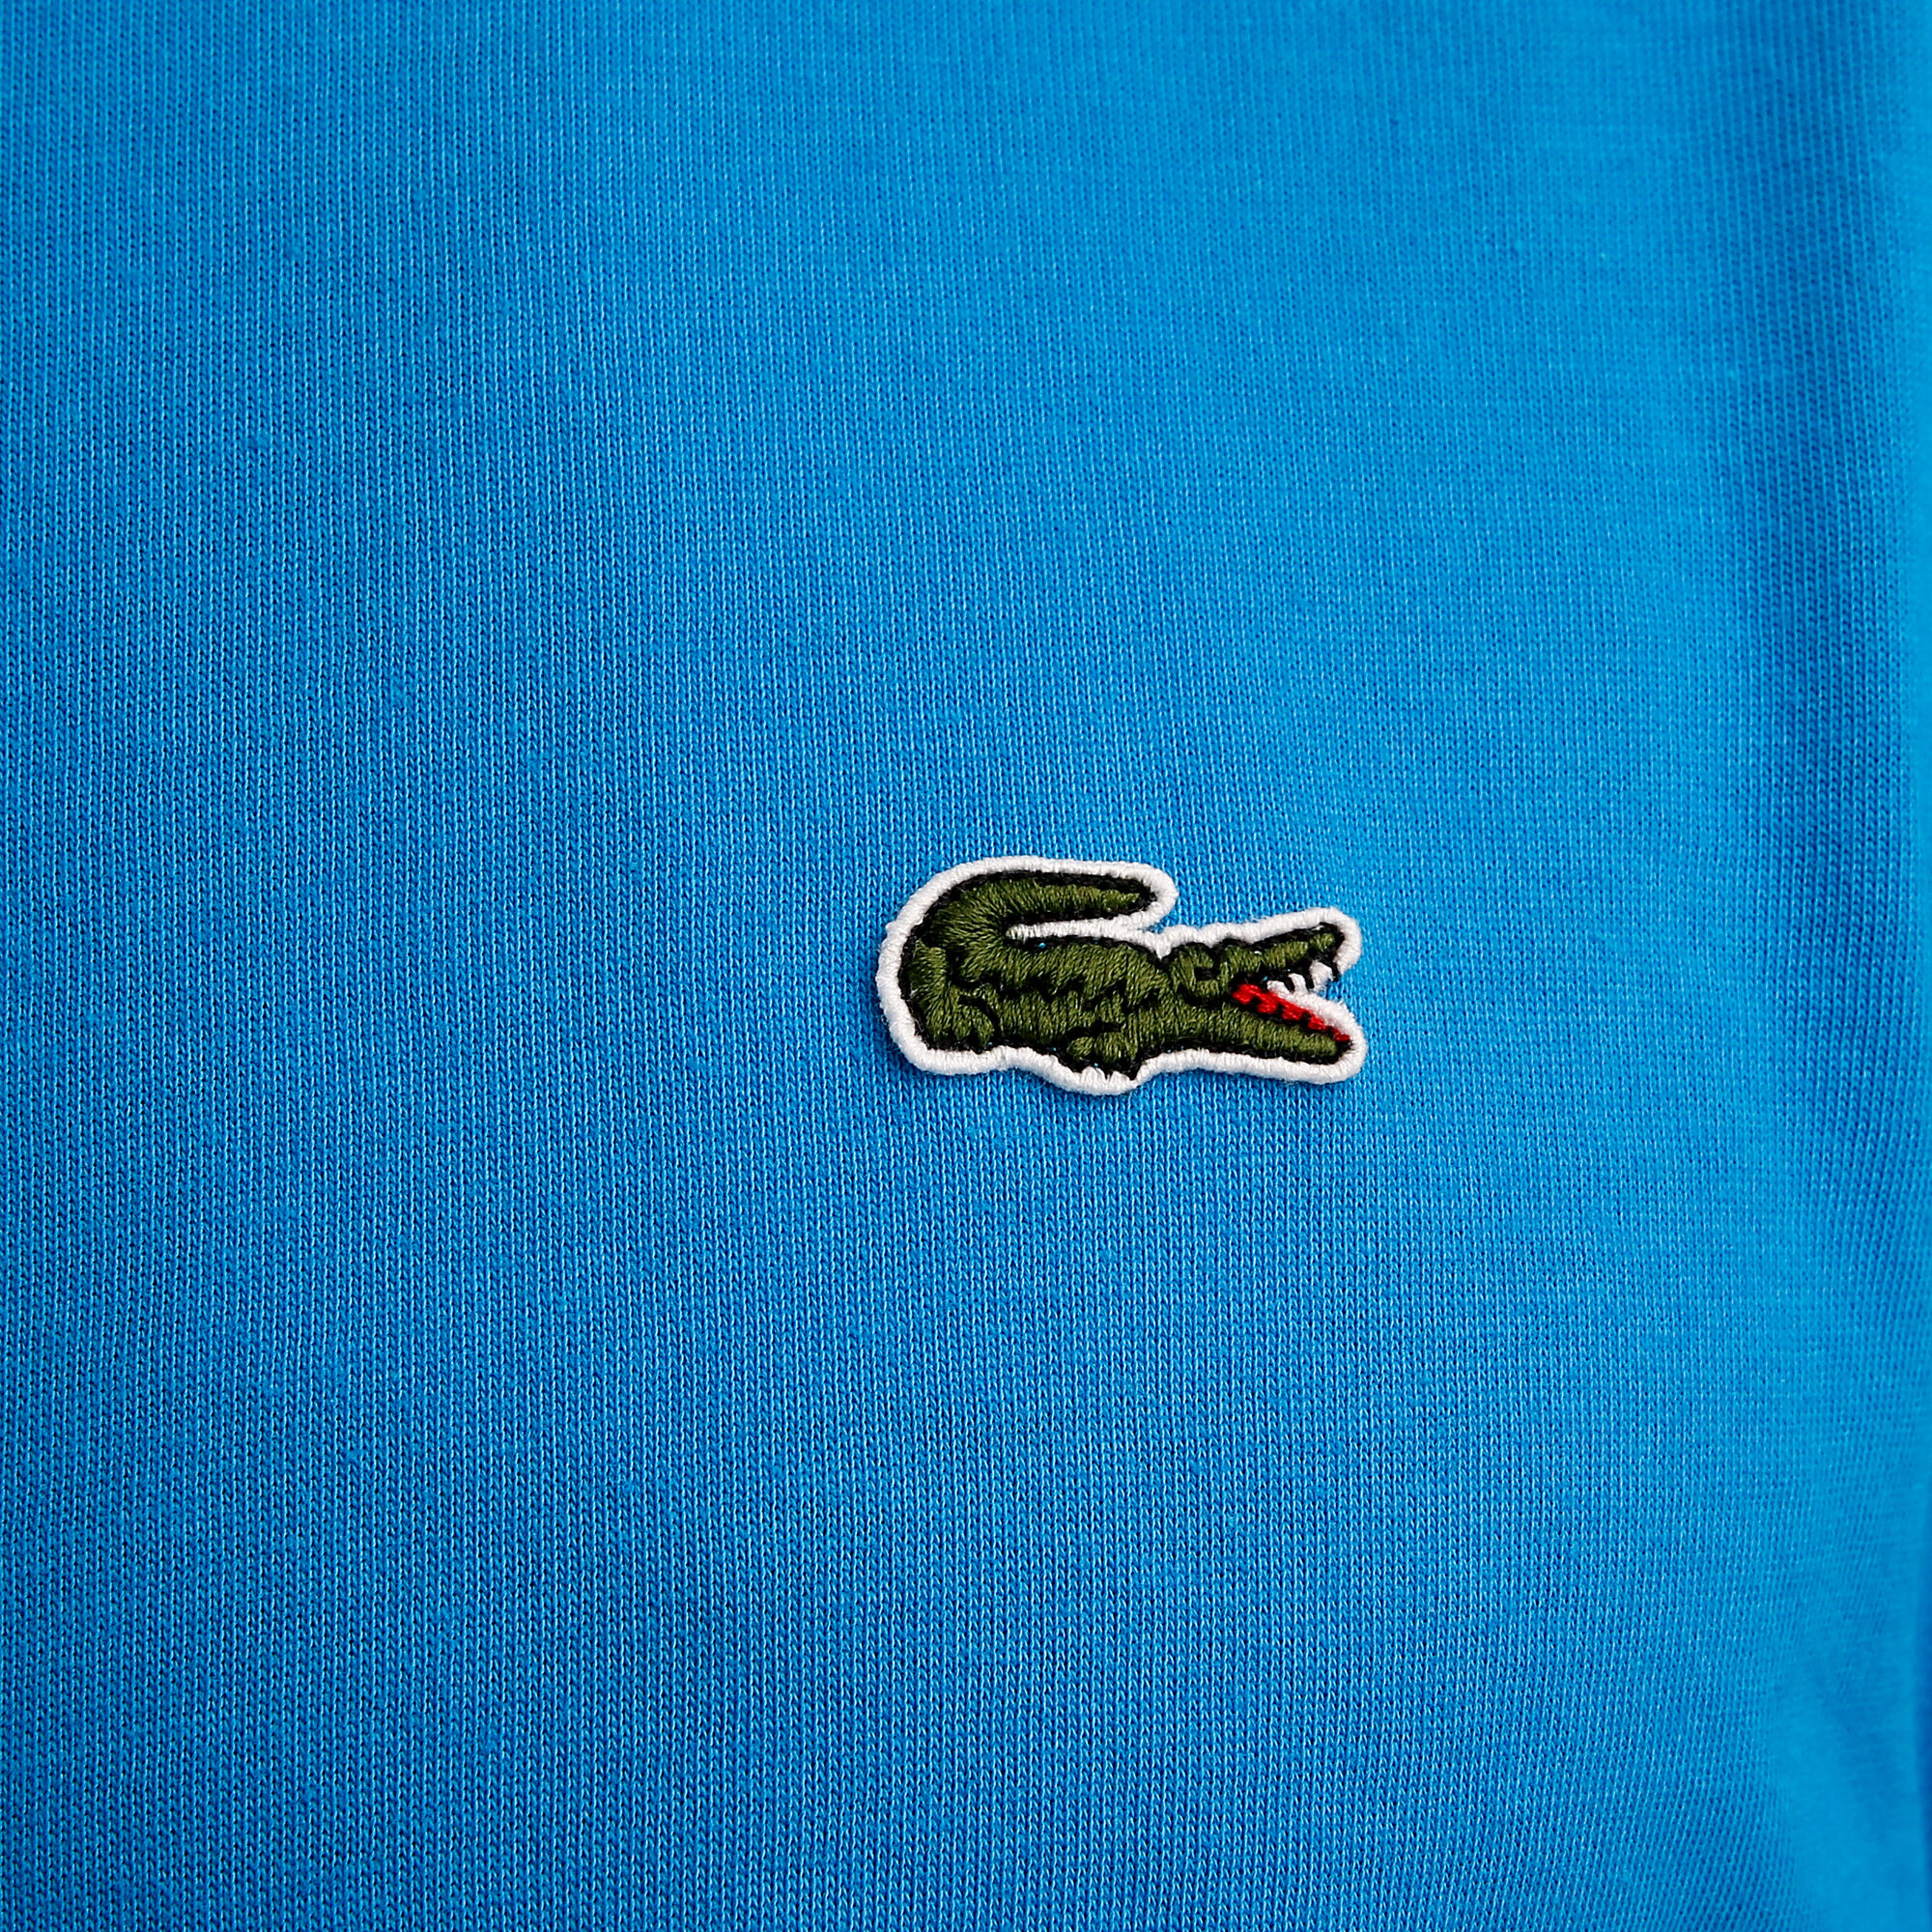 buy Lacoste T-Shirt Men - Blue, Green online | Tennis-Point